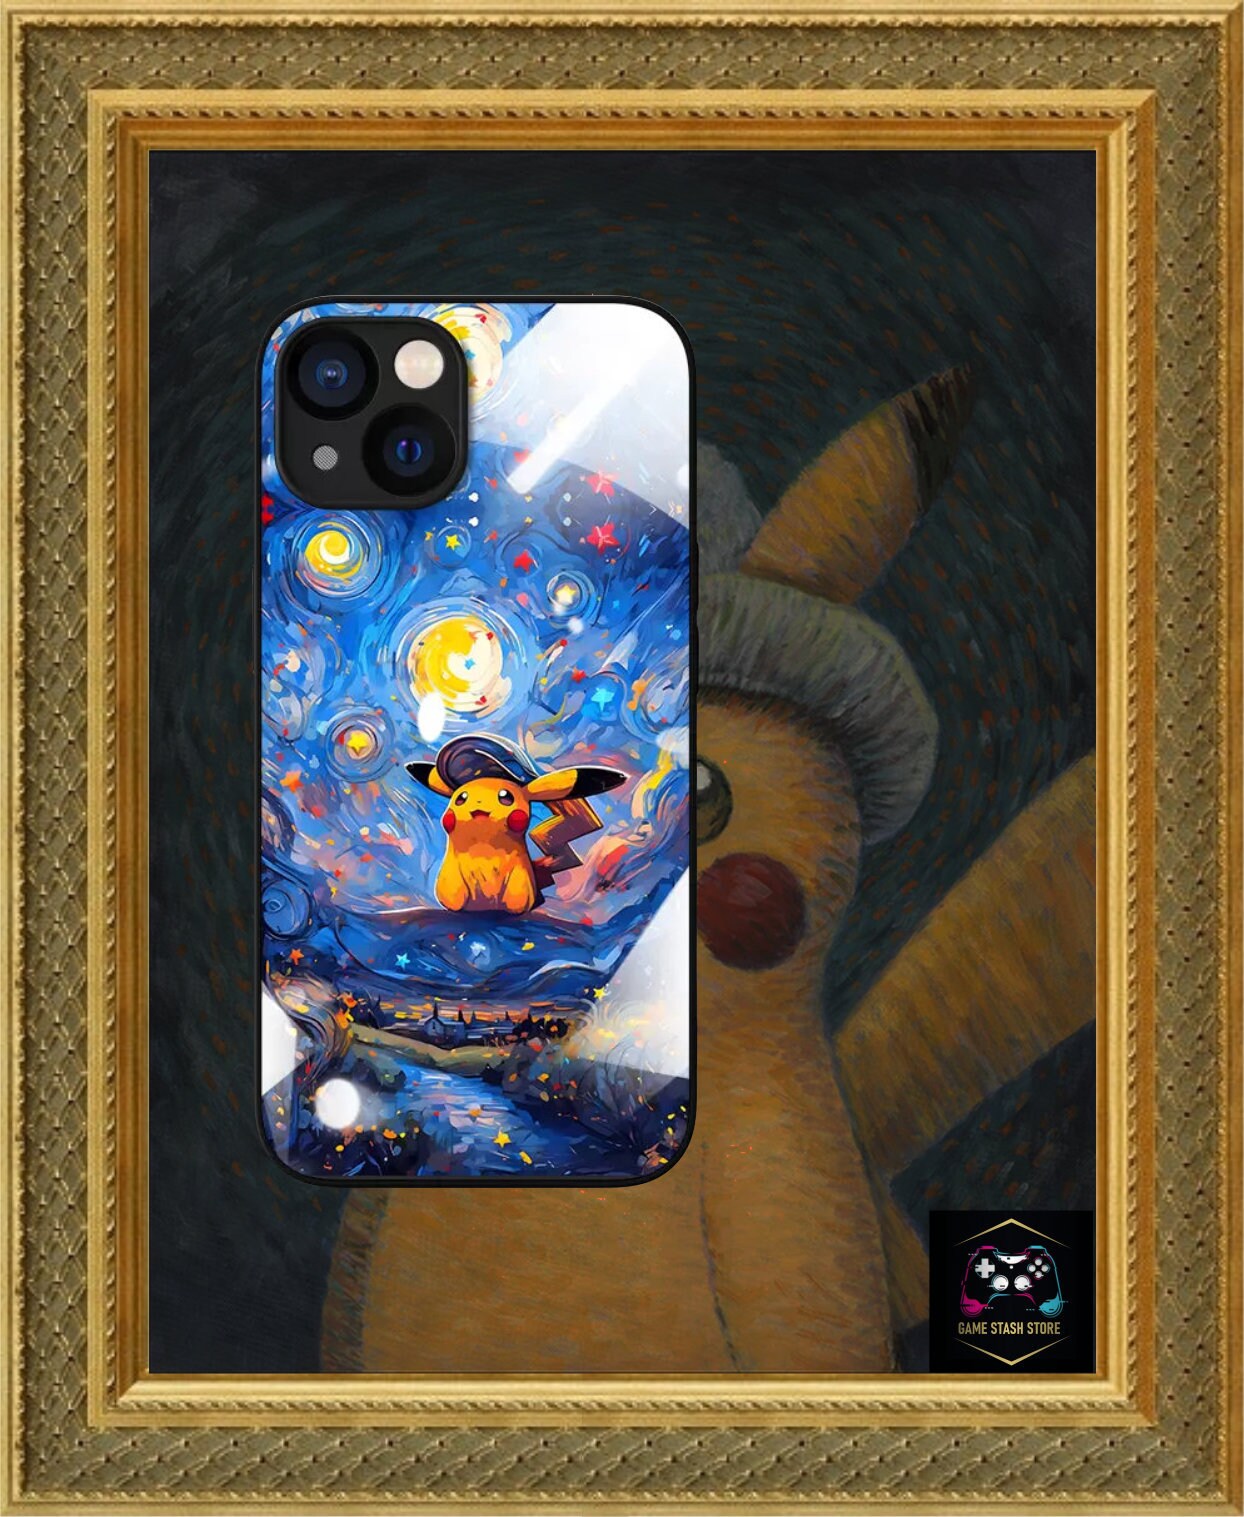 SHINY RAYQUAZA POKEMON ANIME iPhone 6 / 6S Plus Case Cover